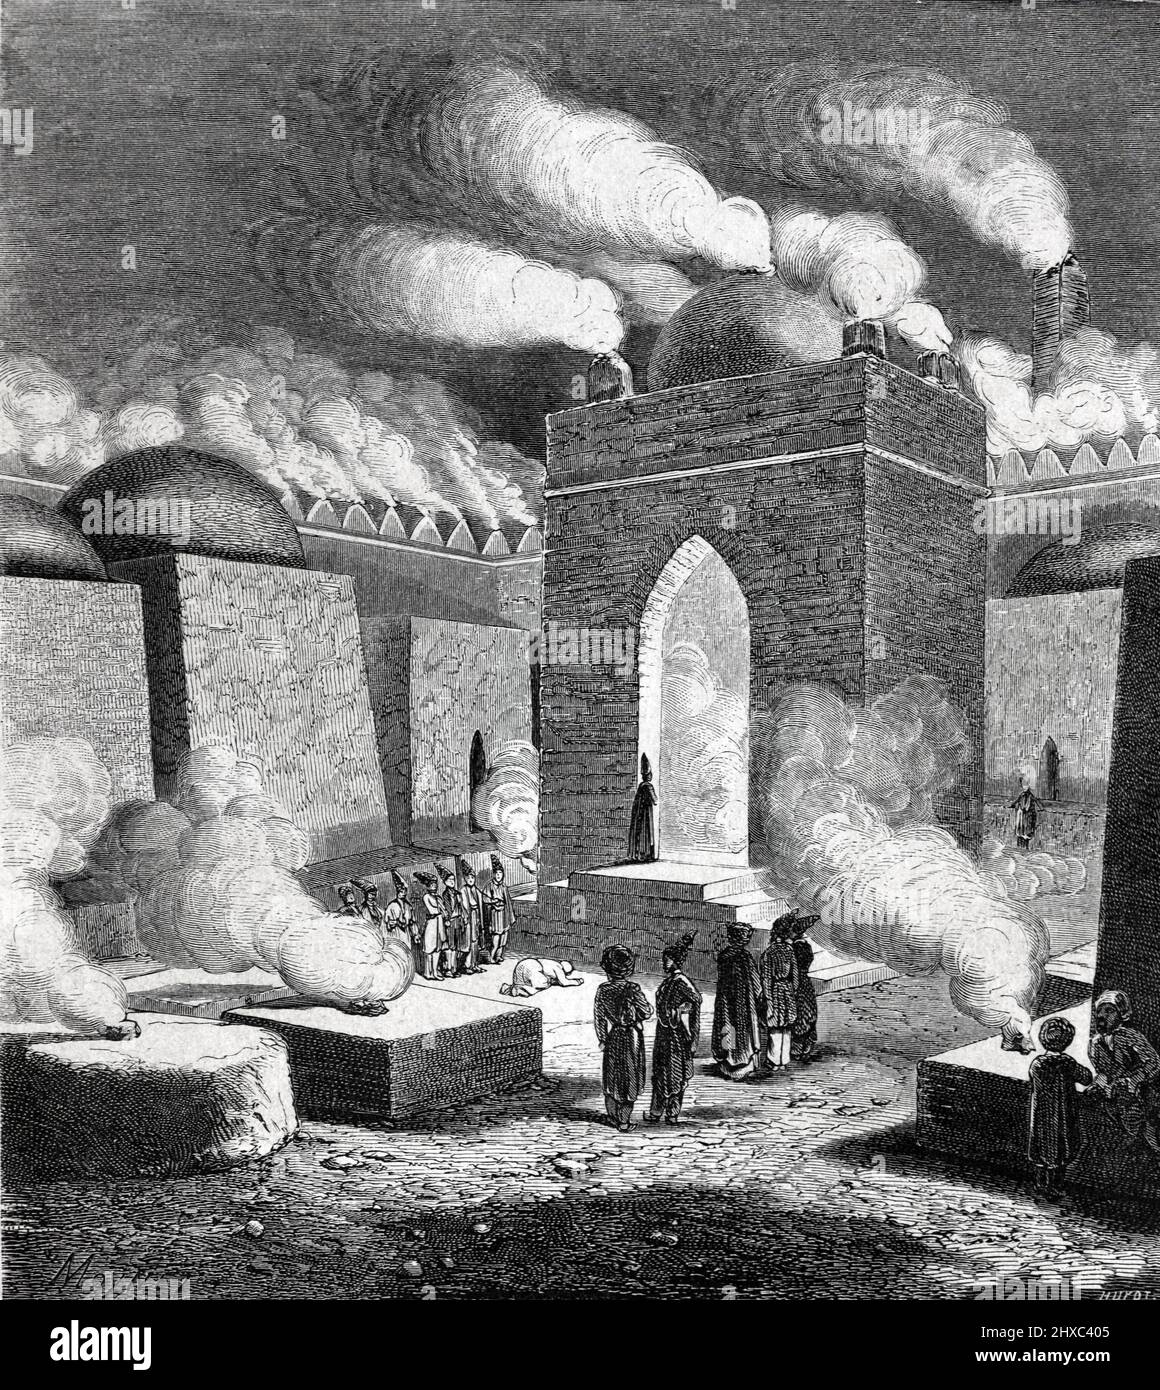 Zorastrian Ceremony in the Fire Temple or Ateshgah of Baku, now a Museum, Surakhany Baku Azerbaijan. Vintage Illustration or Engraving 1860. Stock Photo